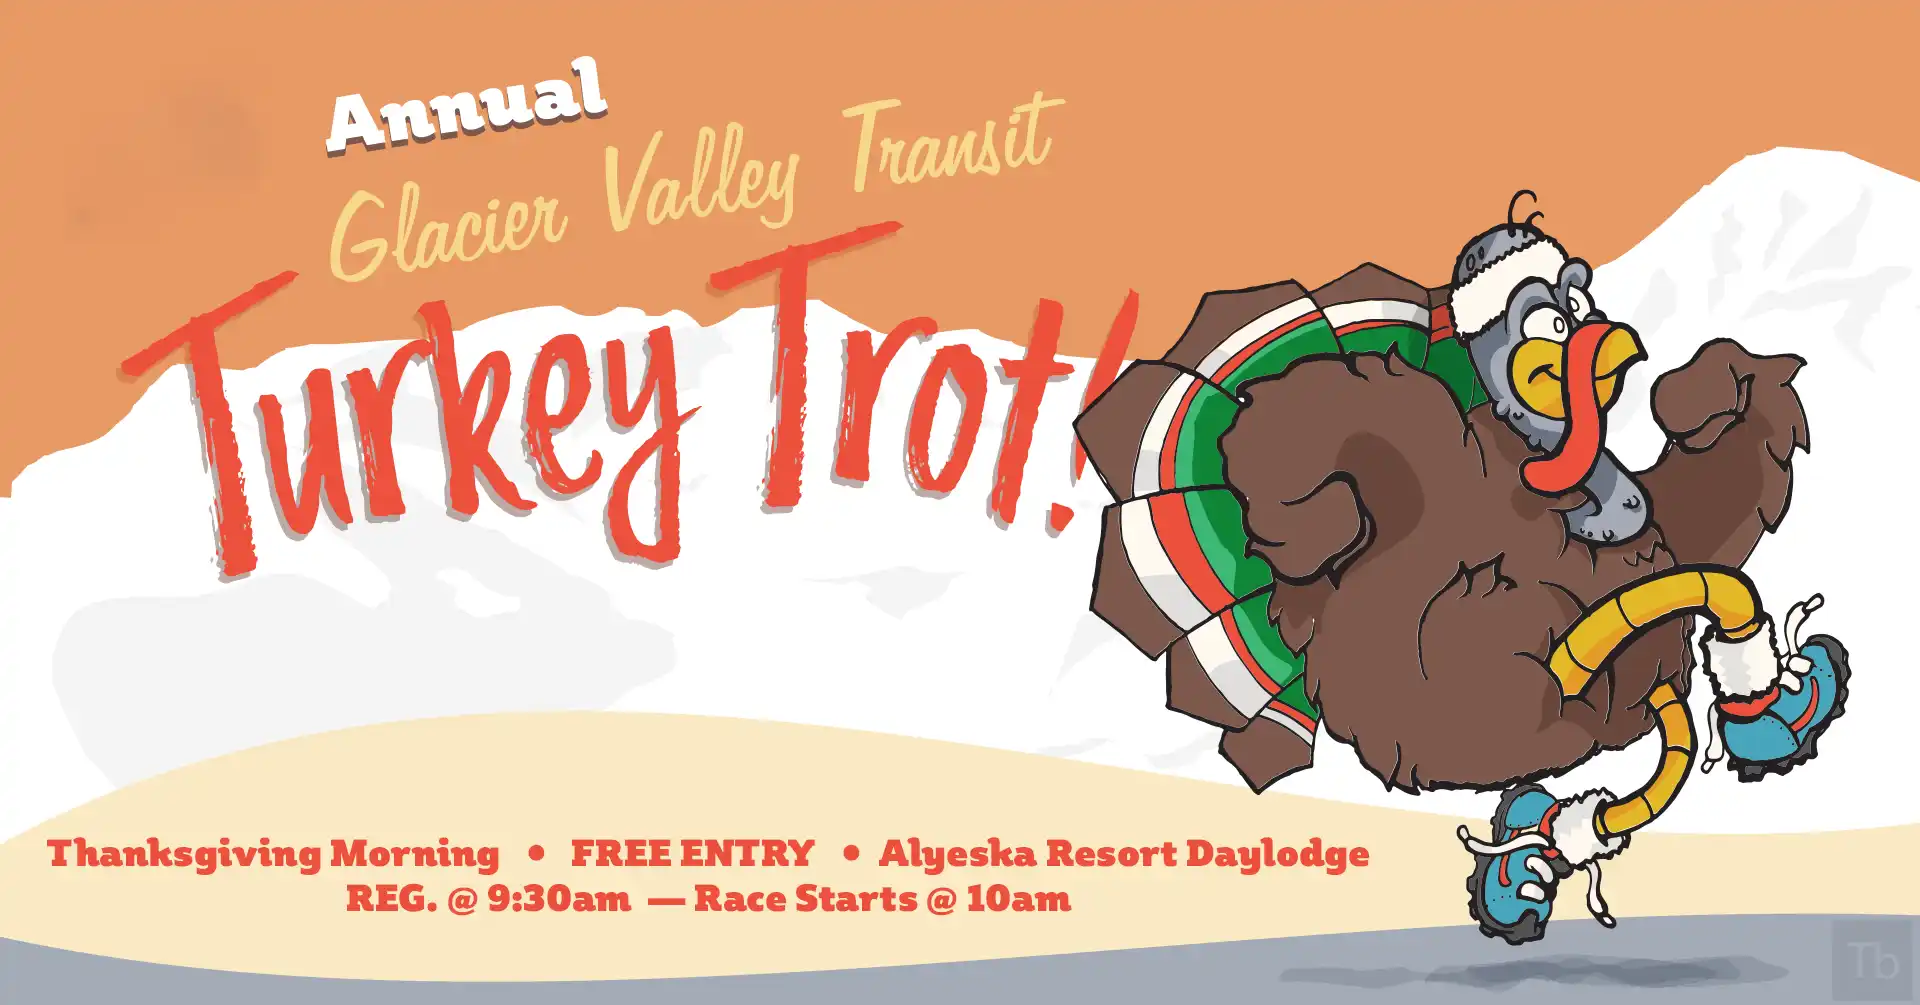 Annual Turkey Trot - Glacier Valley Transit